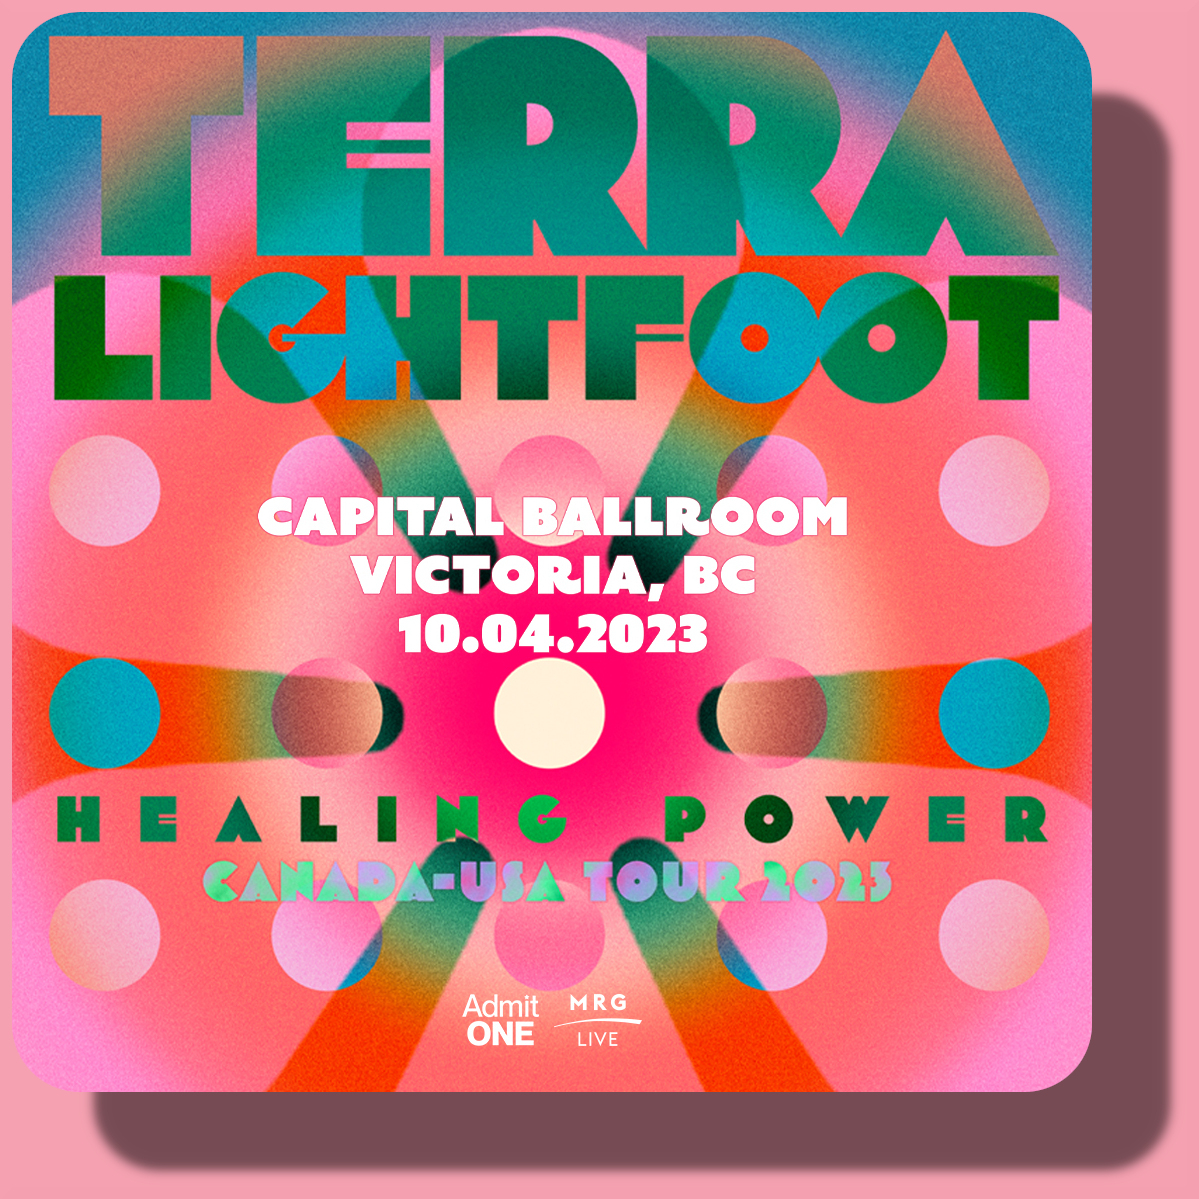 Terra Lightfoot Live at Capital Ballroom | October 4, 2023 | Victoria